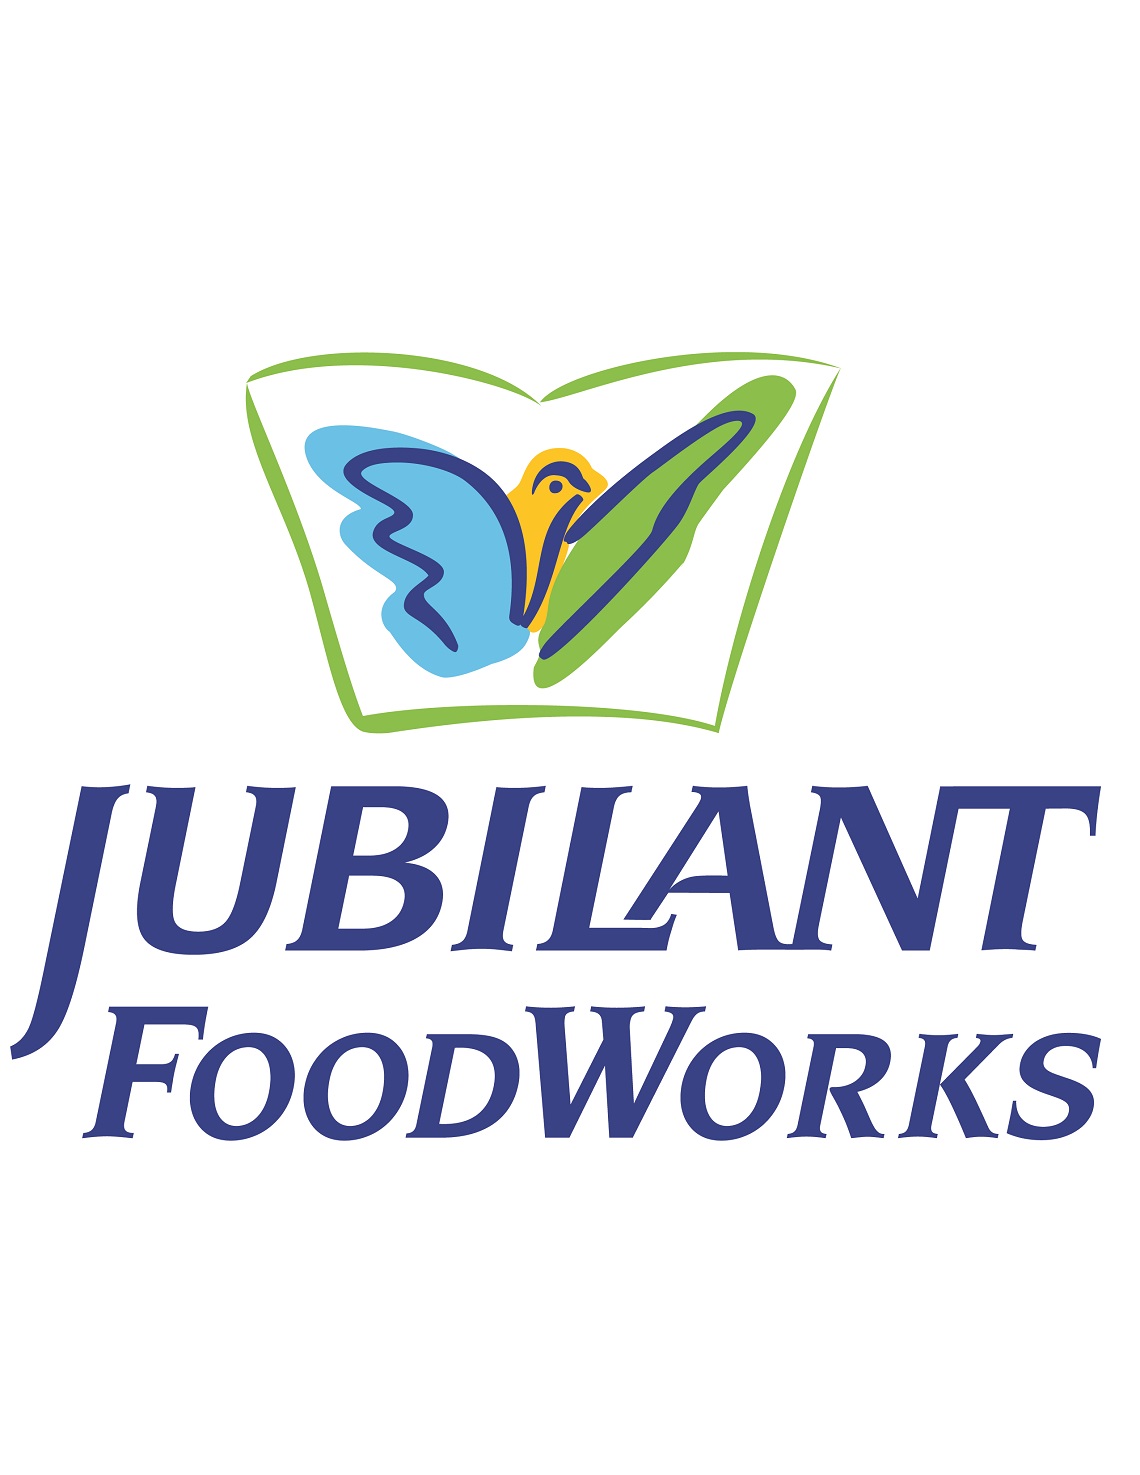 Jubilant Foodworks bullish about medium-term market potential in India